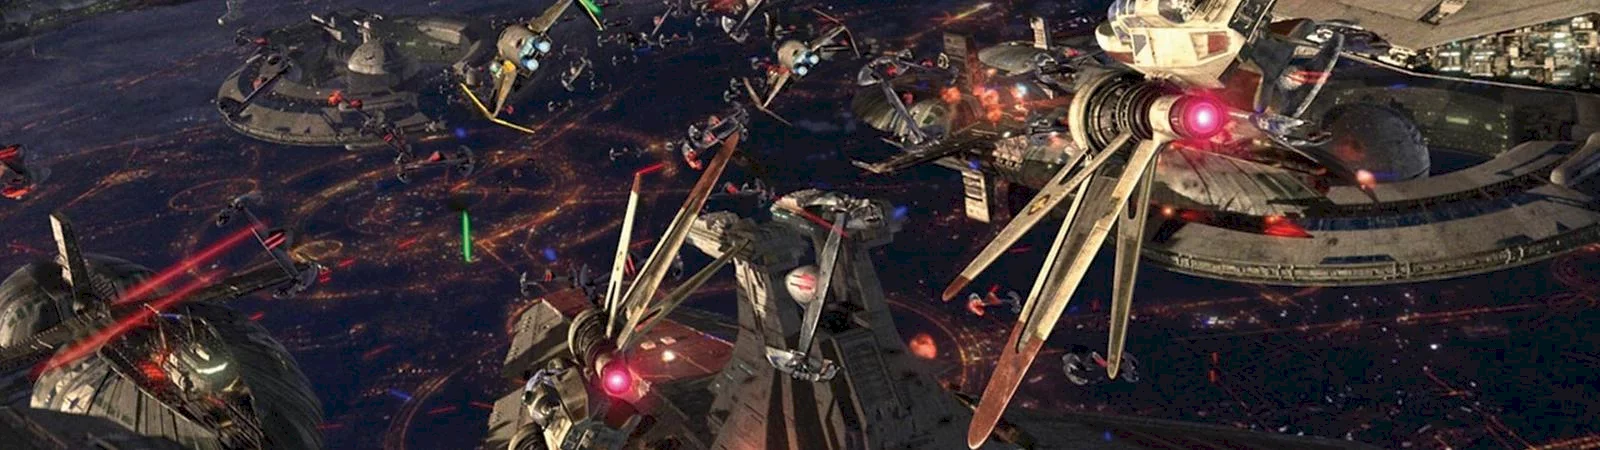 Photo du film : Star Wars : Episode III - La revanche des Sith